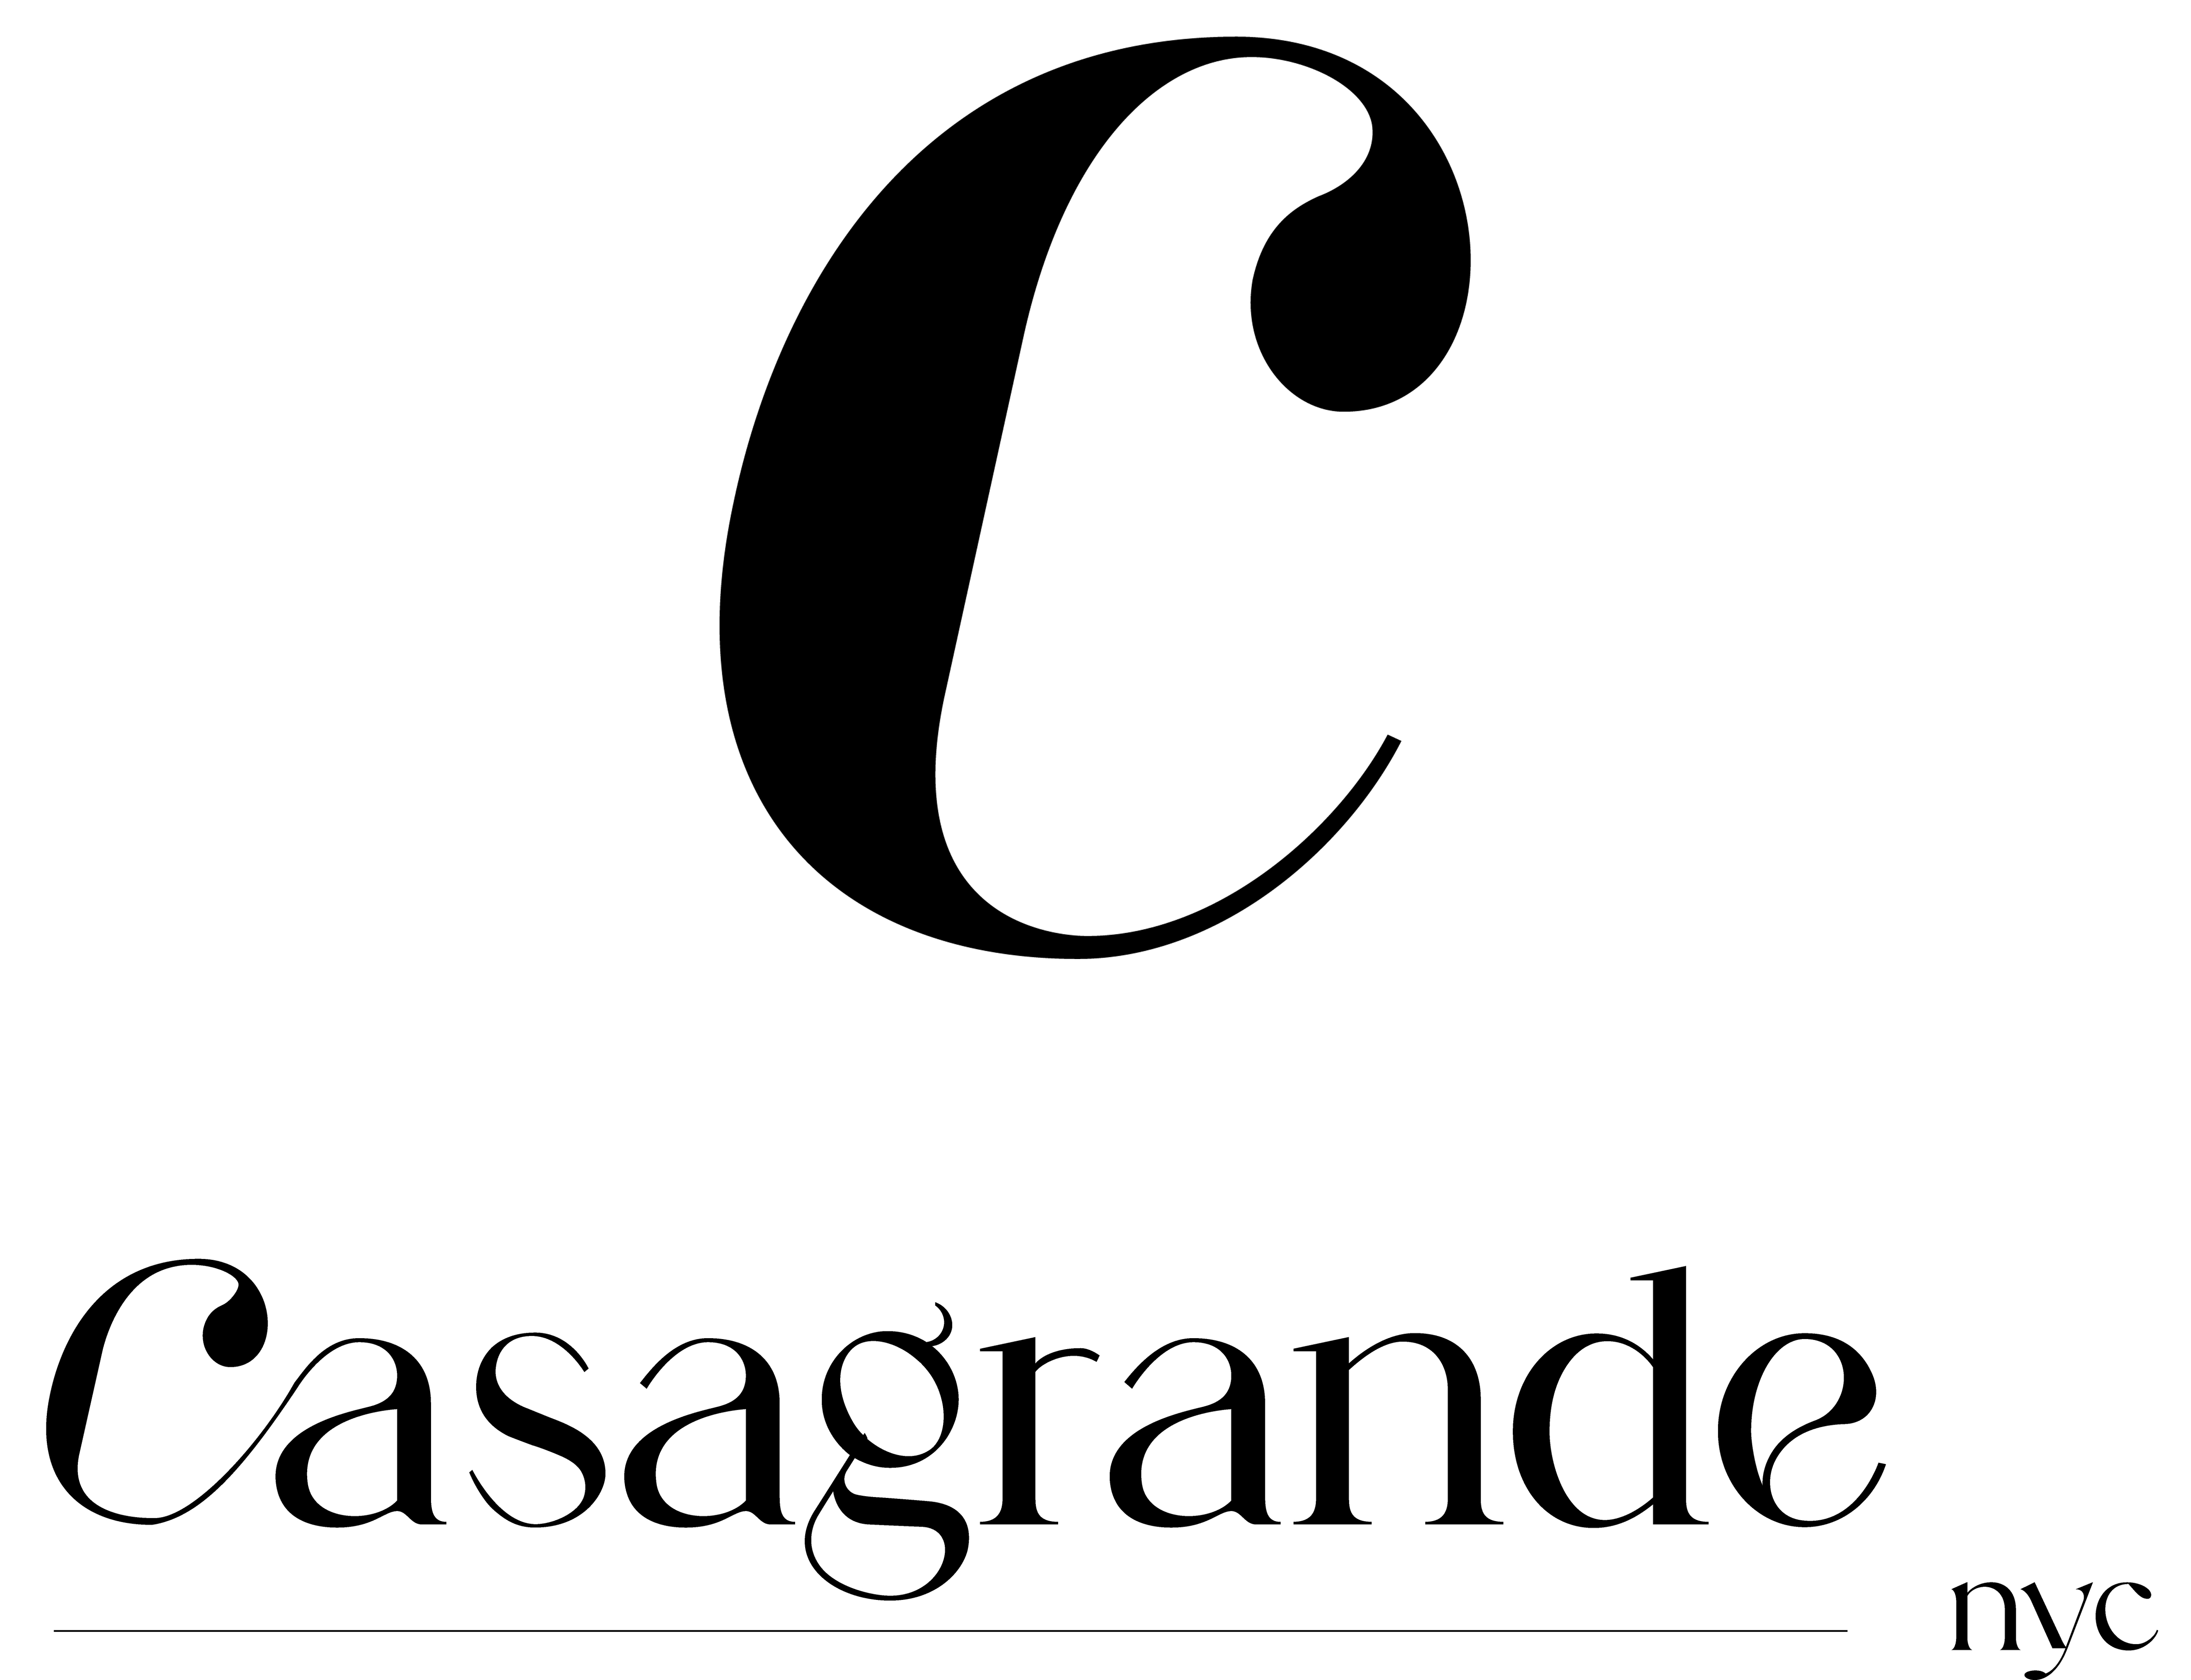 The logo of Casagrande